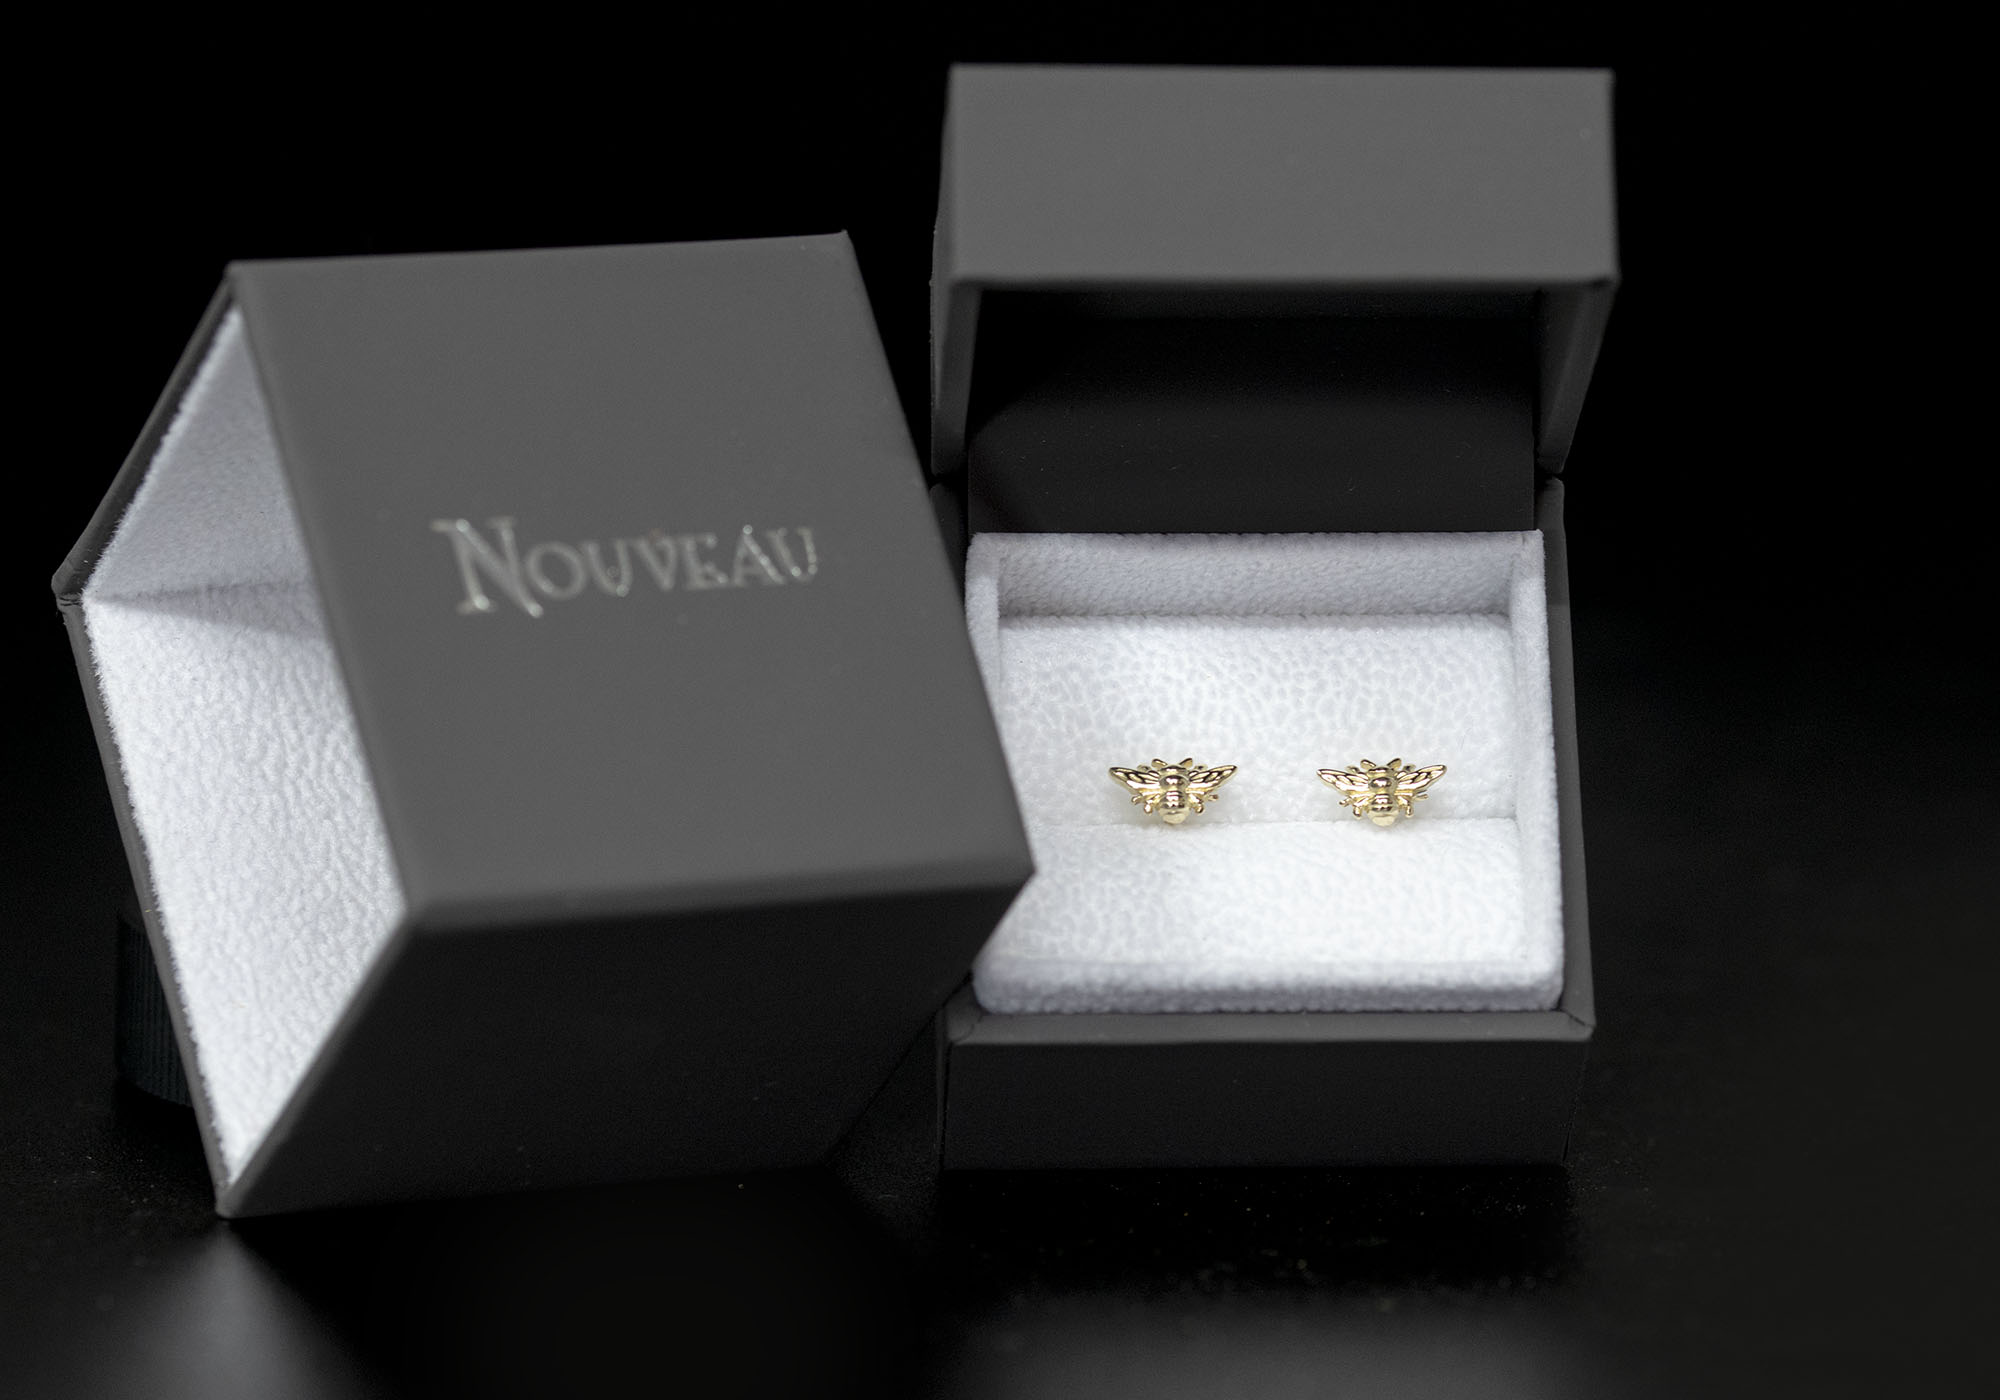 Loonar Studio Jewellery Packaging Design for Nouveau Jewellers